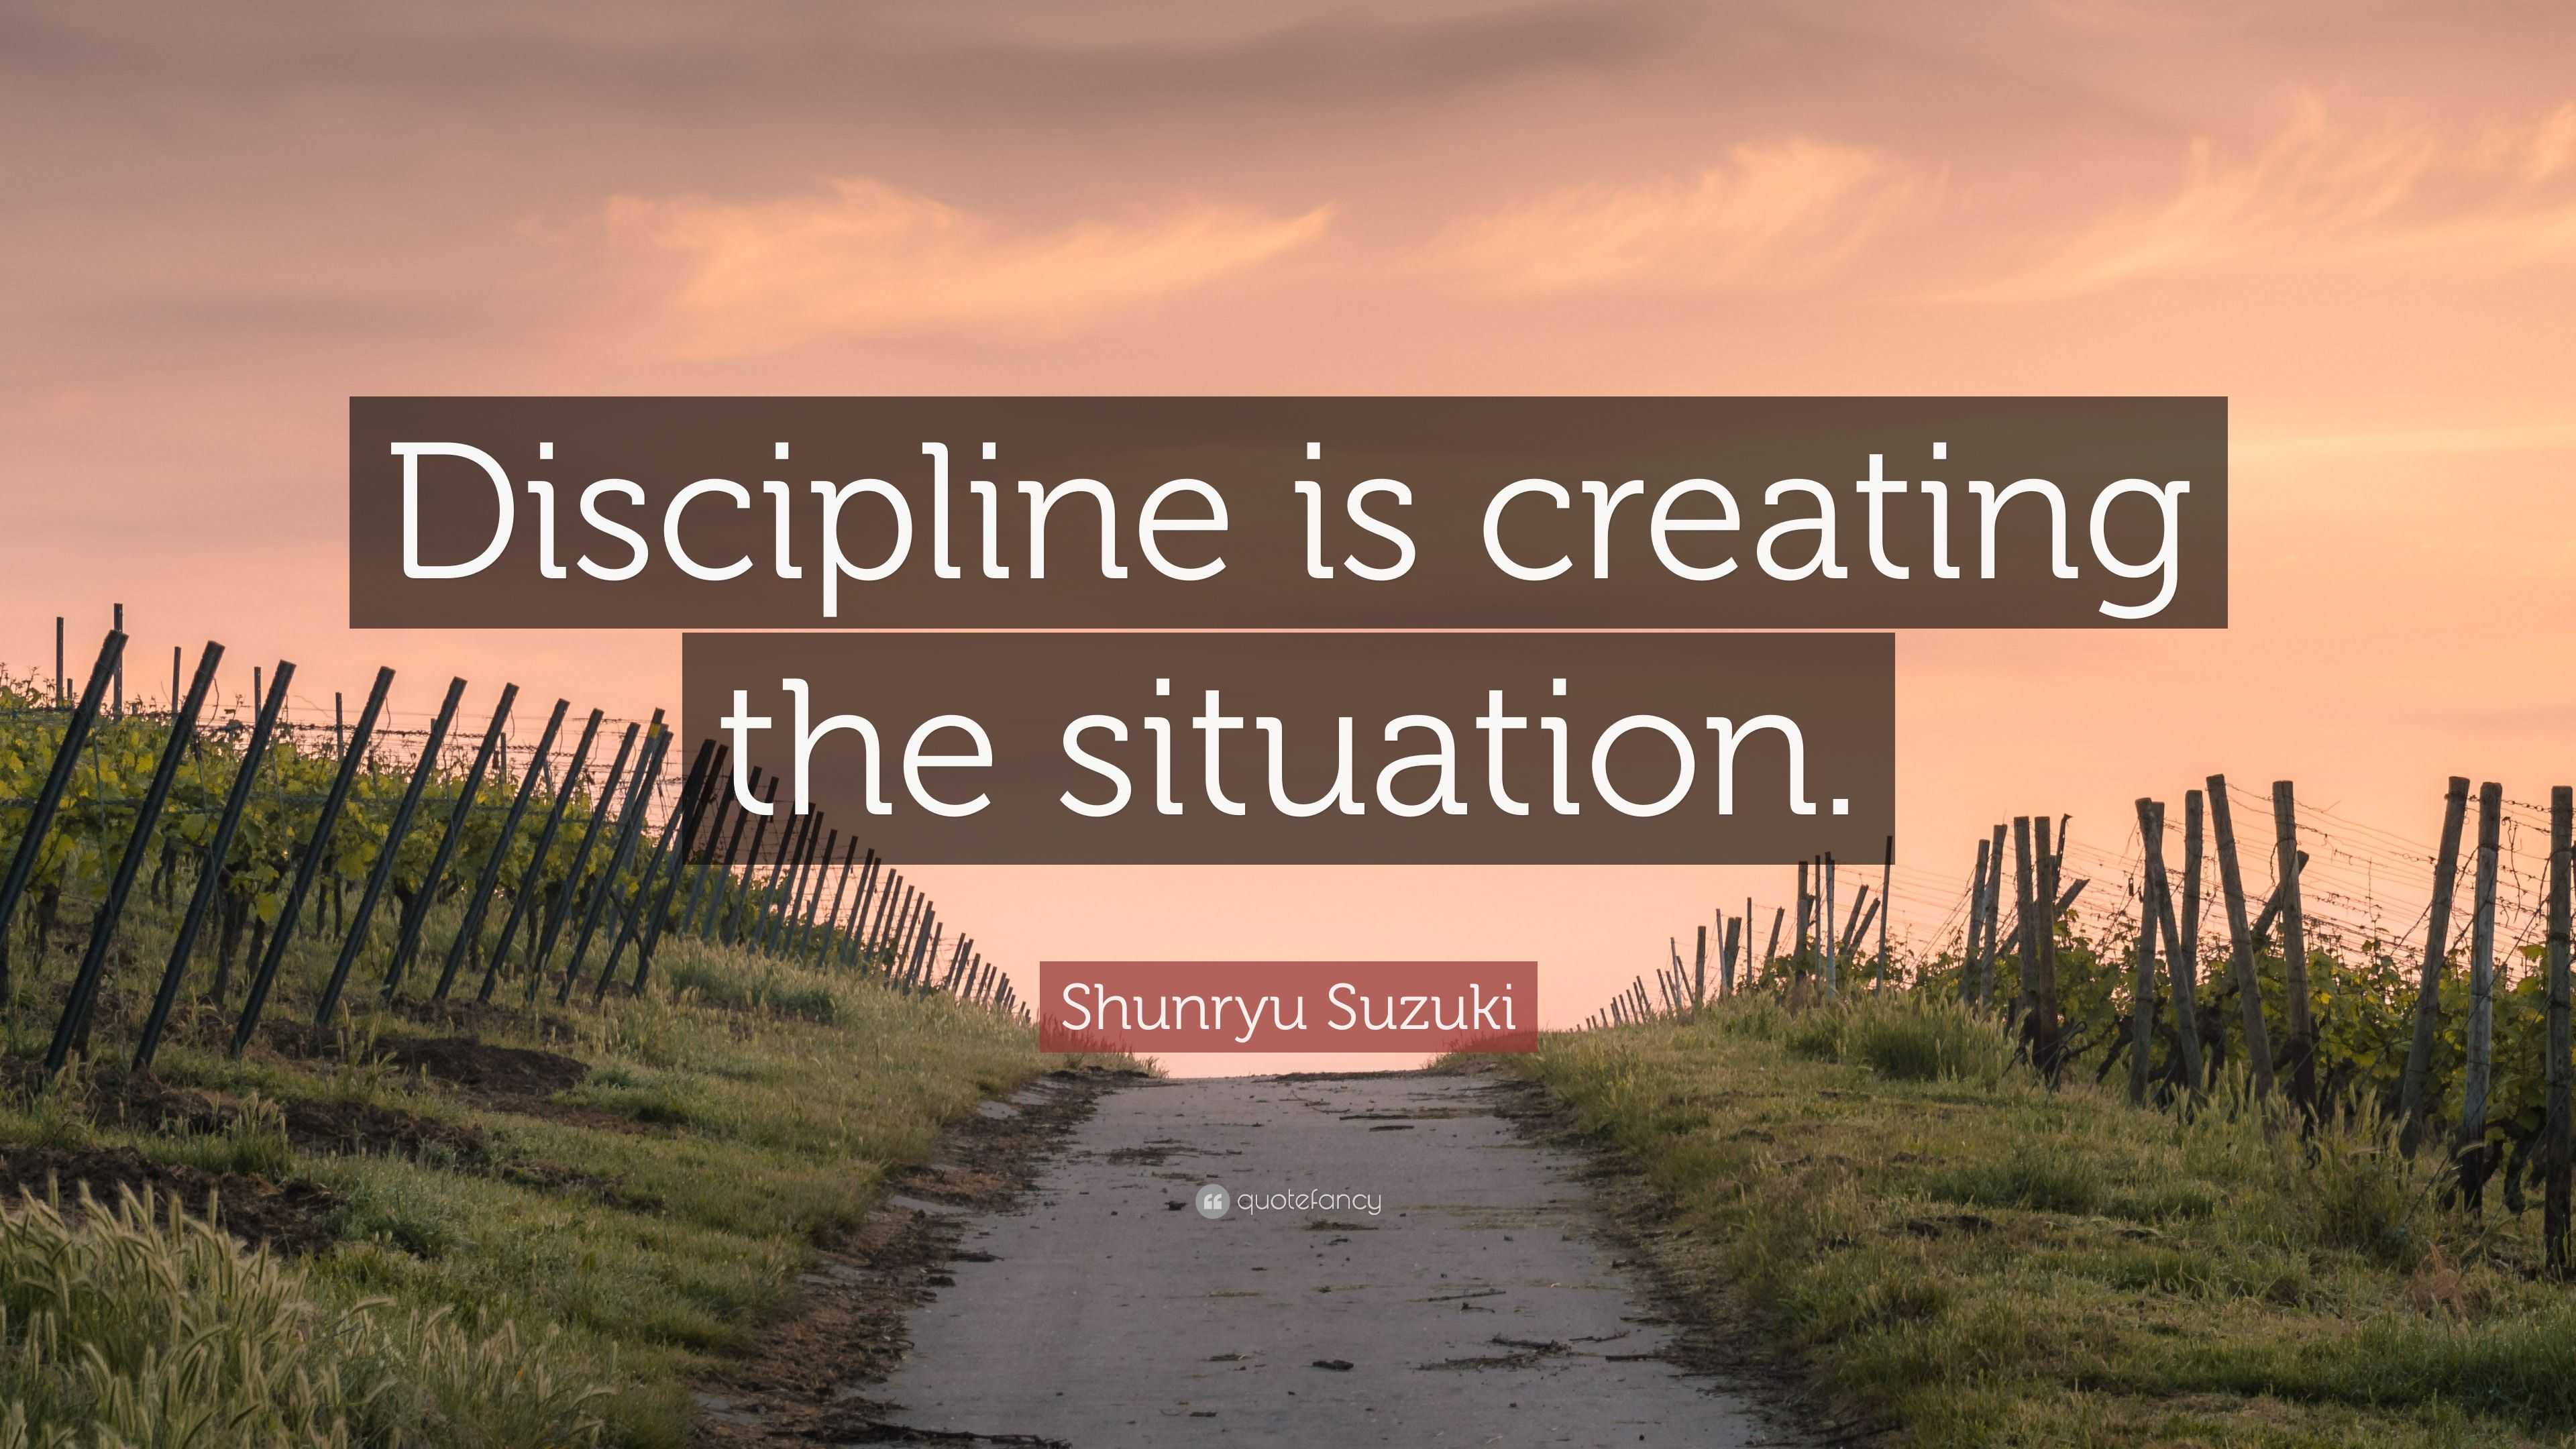 Shunryu Suzuki Quote: “Discipline is creating the situation.”